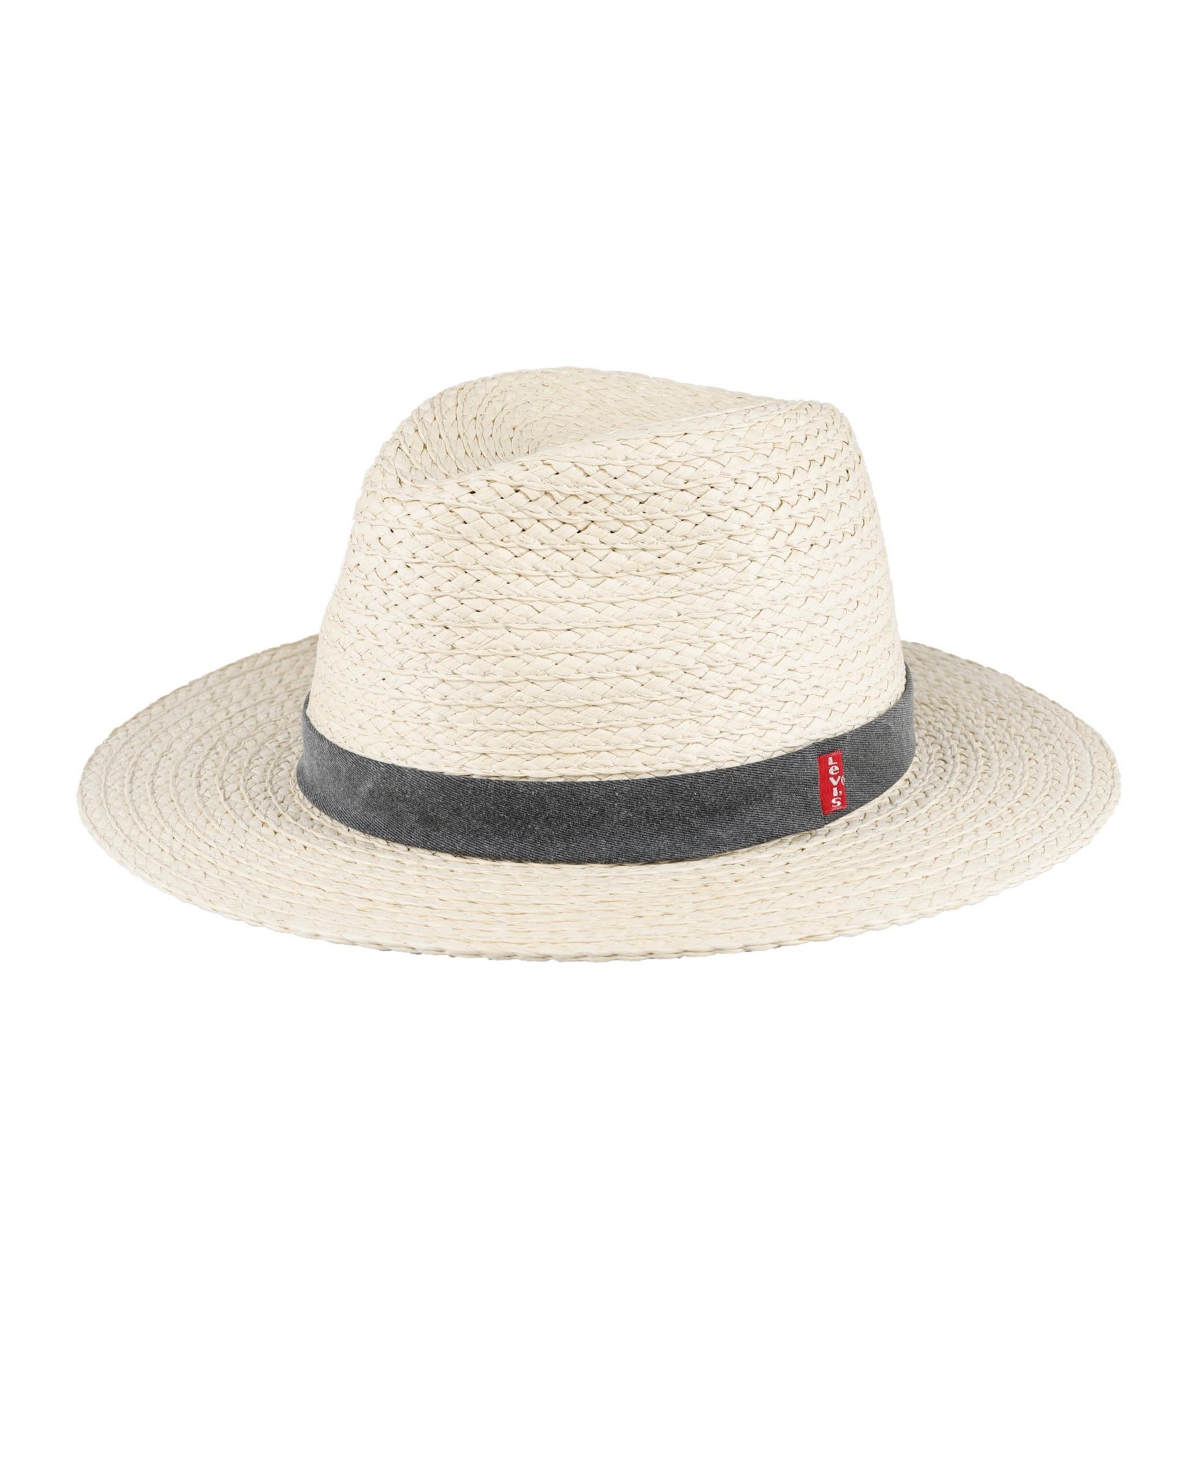 Men's Straw Panama Hat with Denim Washed Band - Natural, Black